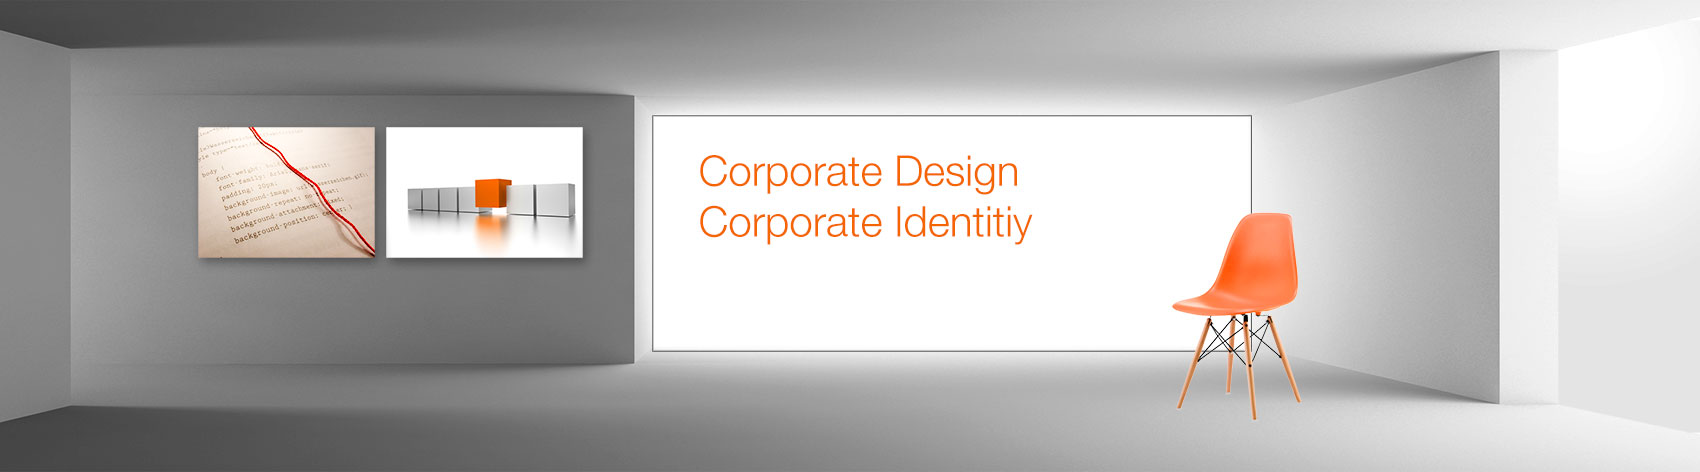 Corporate Design, Corporate Identity